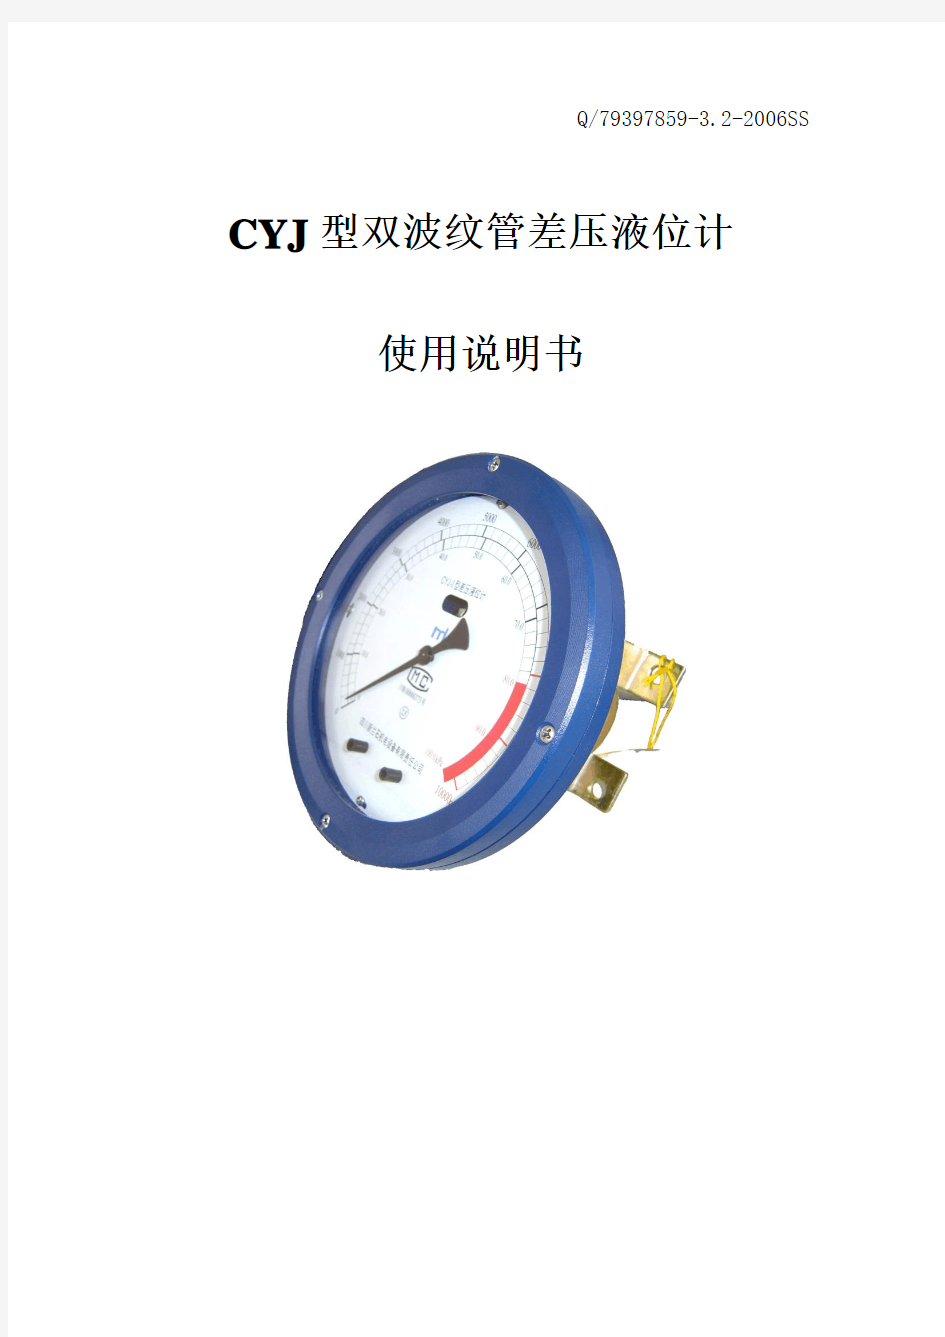 CYJ-1型双波纹管差压液位计说明